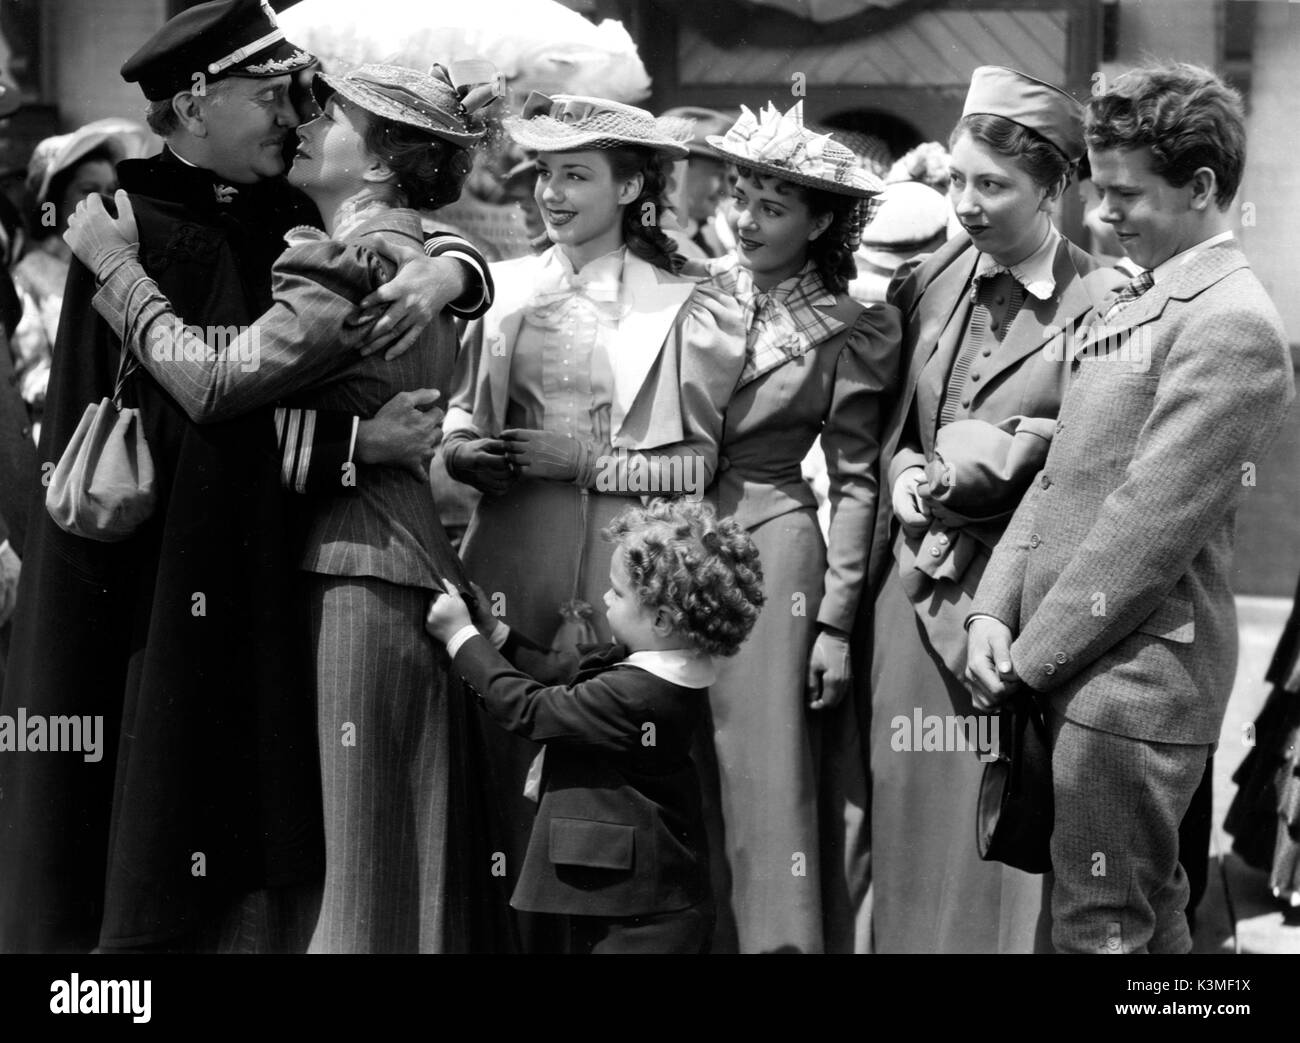 MOTHER CAREY'S CHICKENS [US 1938] [L-R] RALPH MORGAN, FAY BAINTER, ANNE SHIRLEY, RUBY KEELER, JACKIE MORAN, PHYLLIS KENNEDY, DONNIE DUNAGAN [child]     Date: 1938 Stock Photo